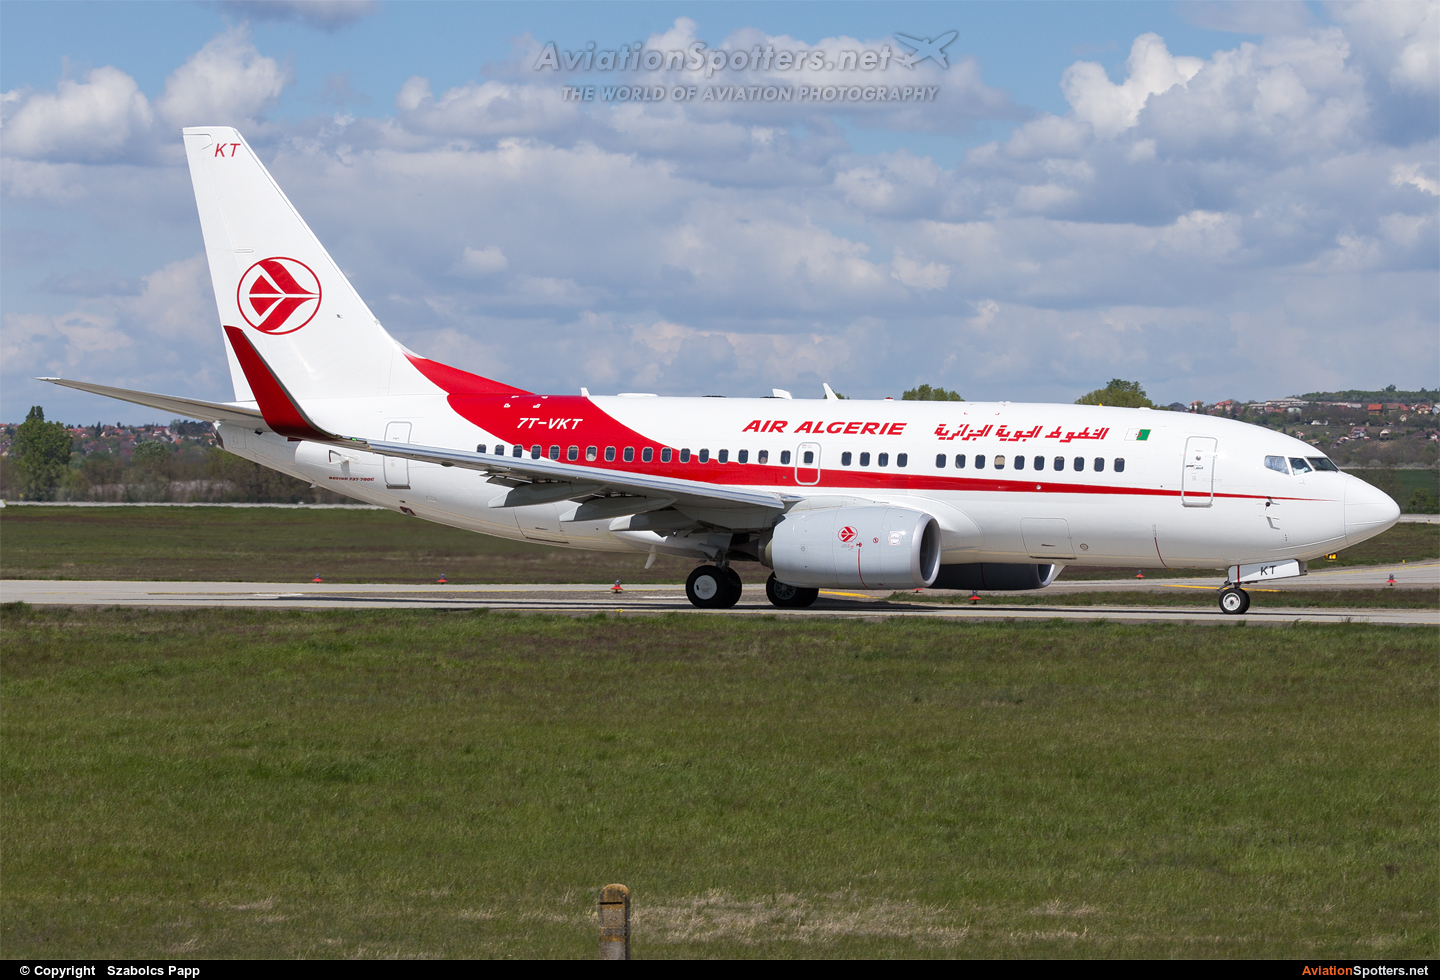 Air Algerie  -  737-700  (7T-VKT) By Szabolcs Papp (mr.szabi)